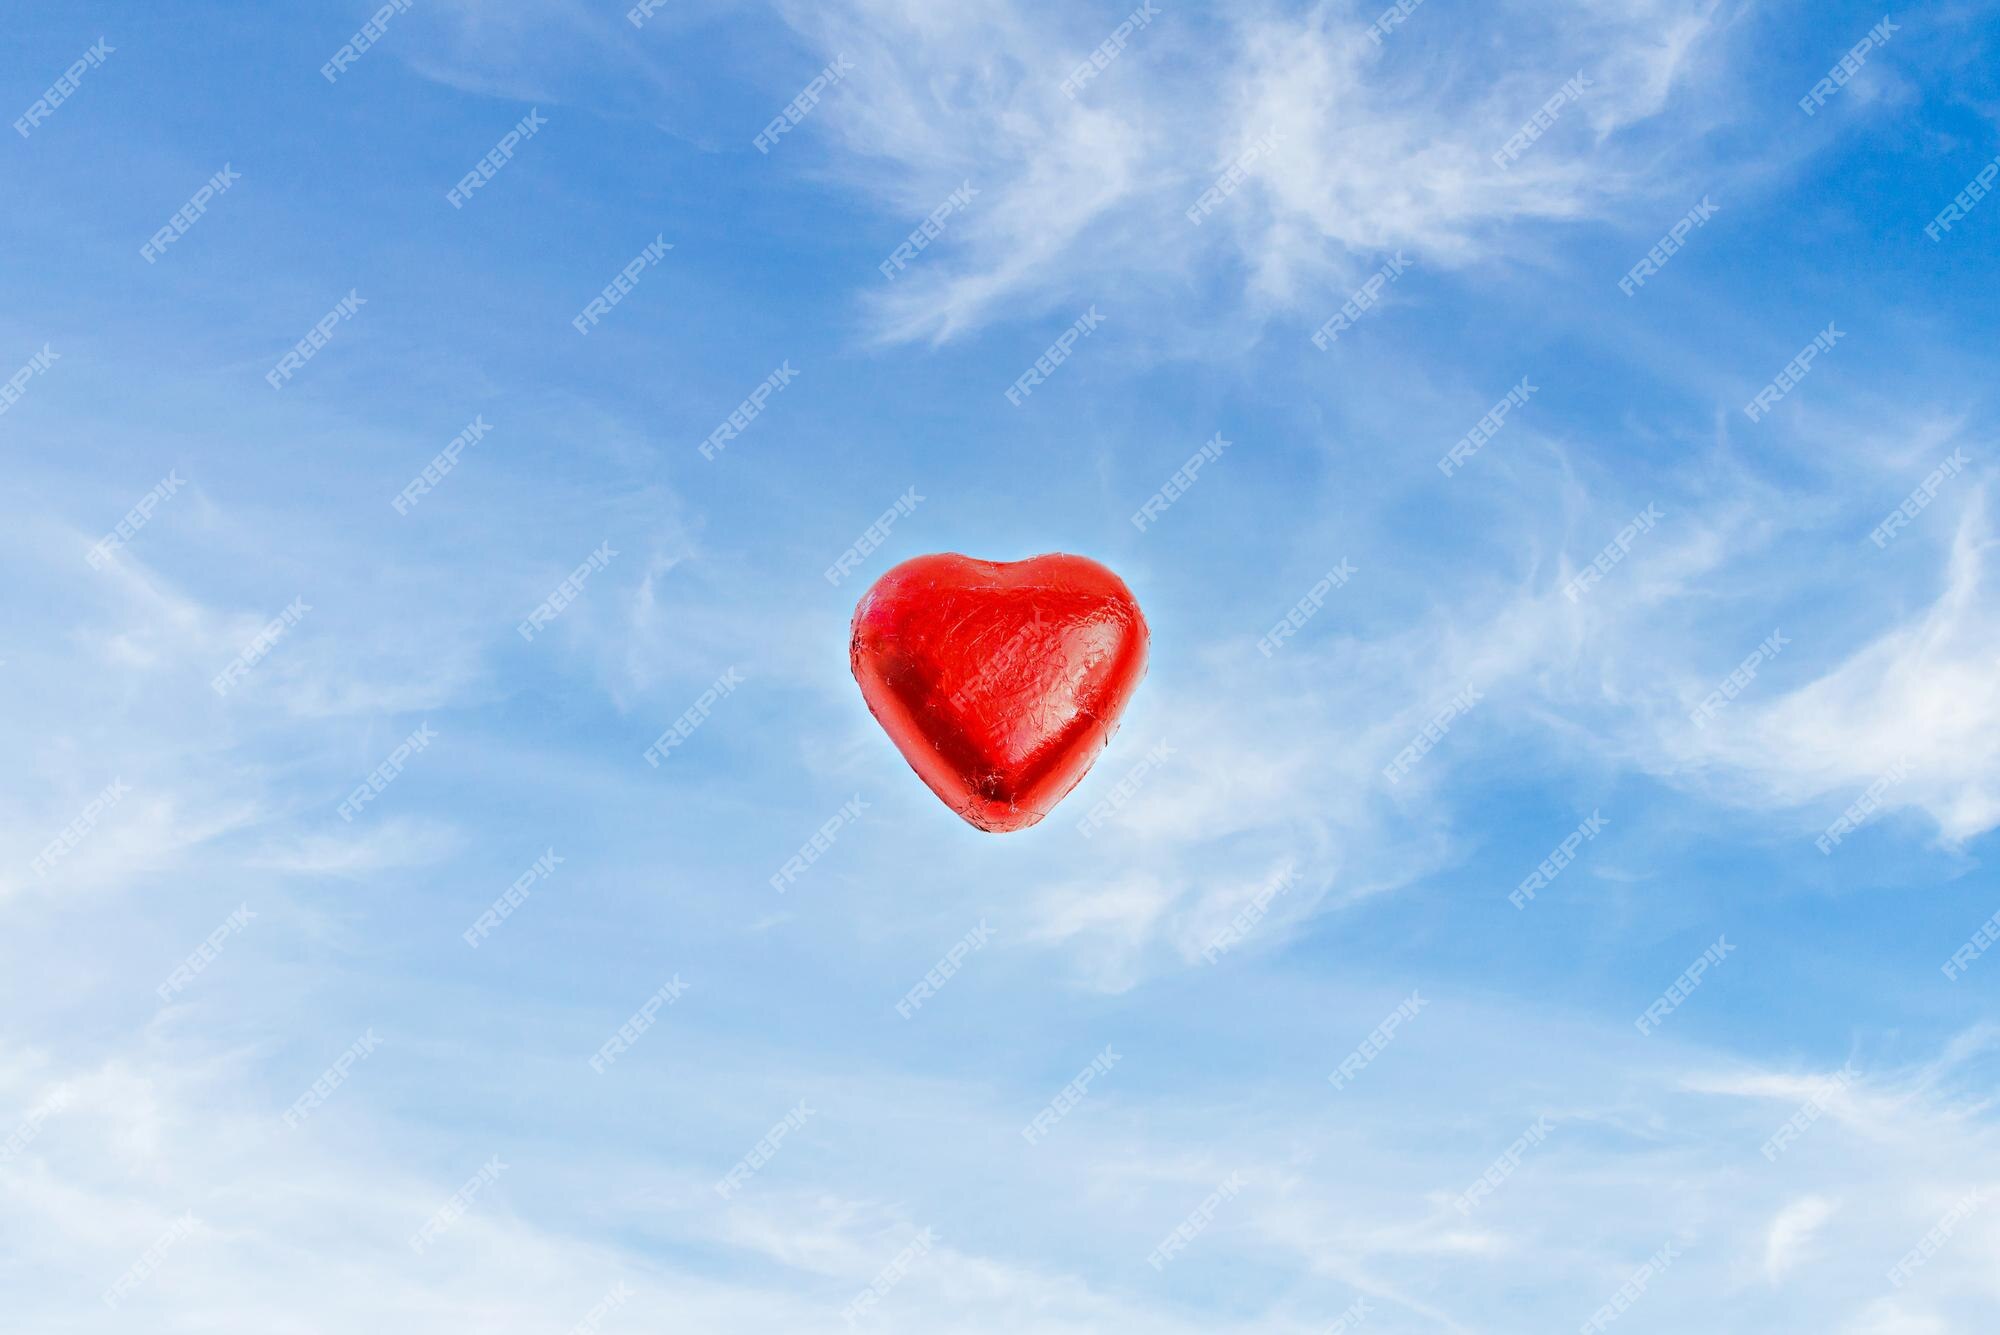 Bombón de chocolate en forma de corazón envuelto en lámina roja sobre un  fondo azul con nubes blancas. | Foto Premium